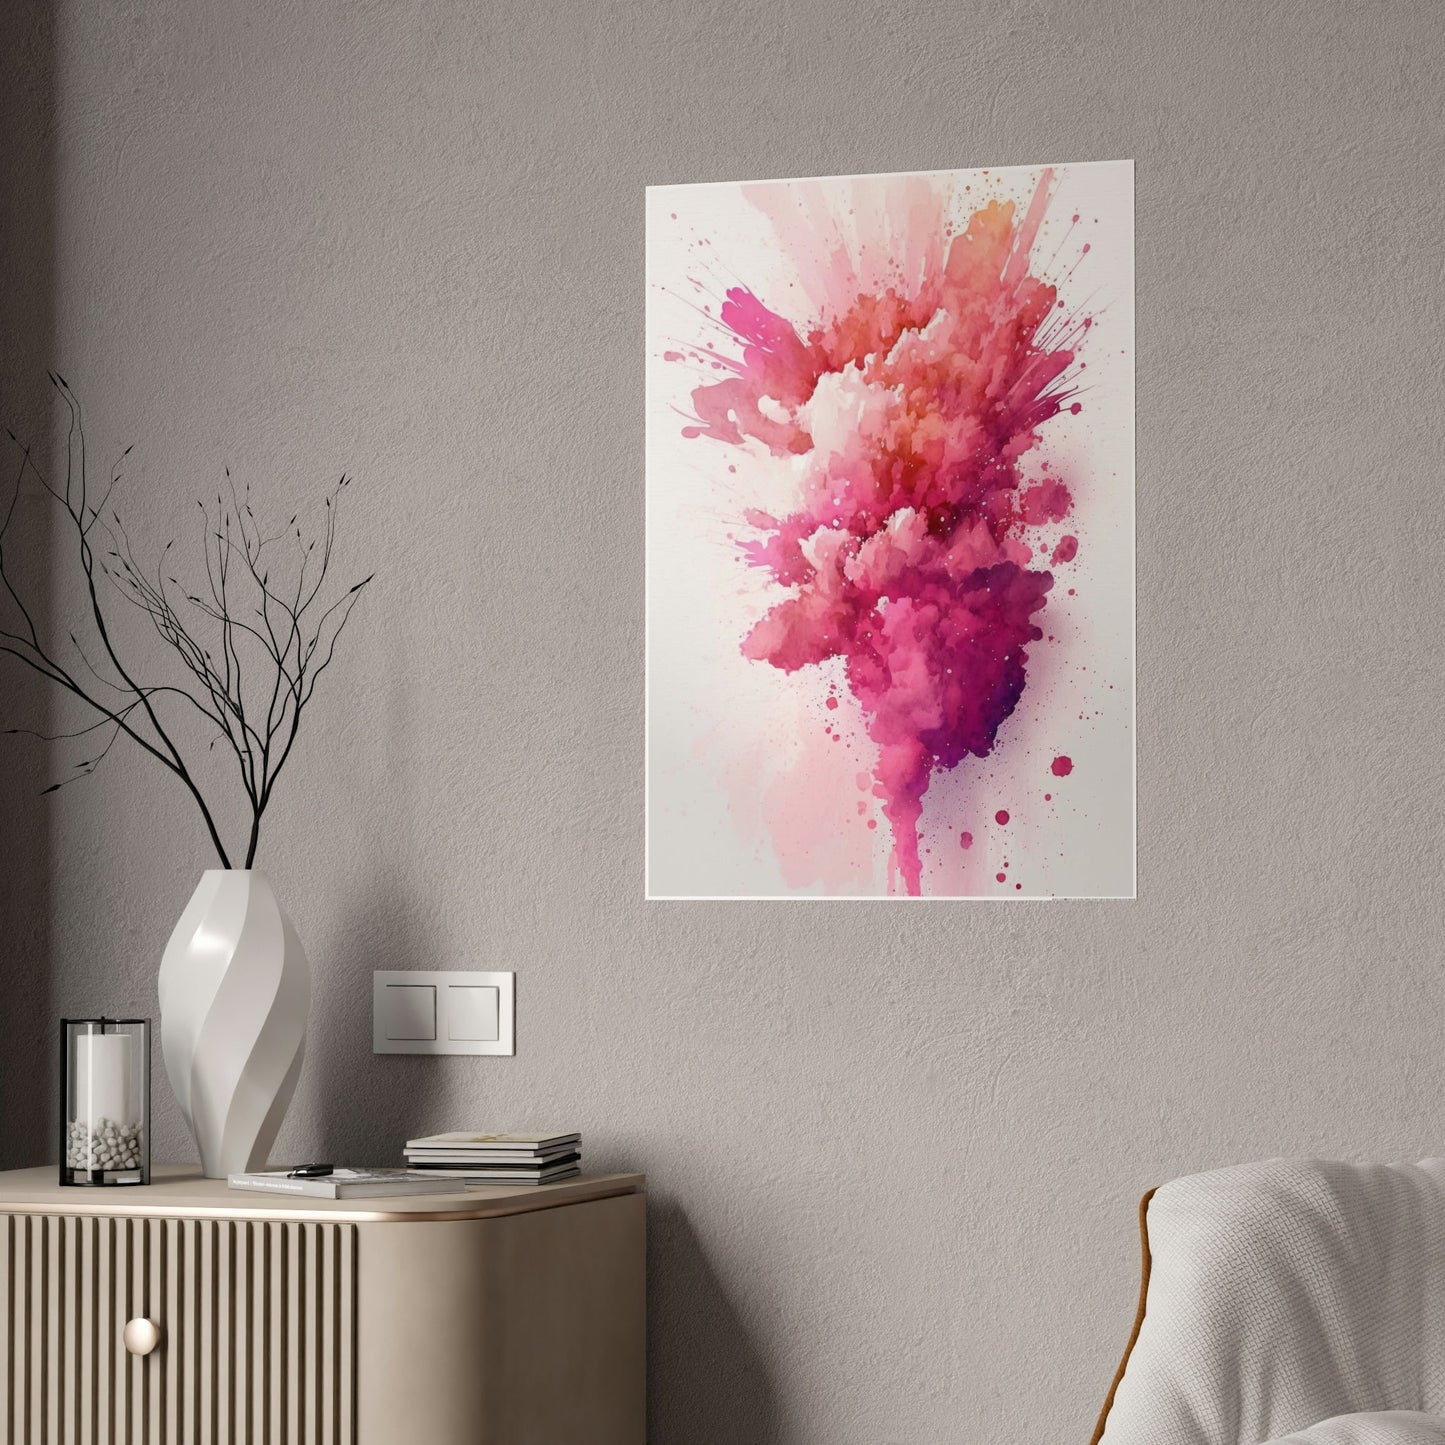 Glowing Pink: Natural Canvas Wall Art of Abstract Artworks in Luminous Pink Shades